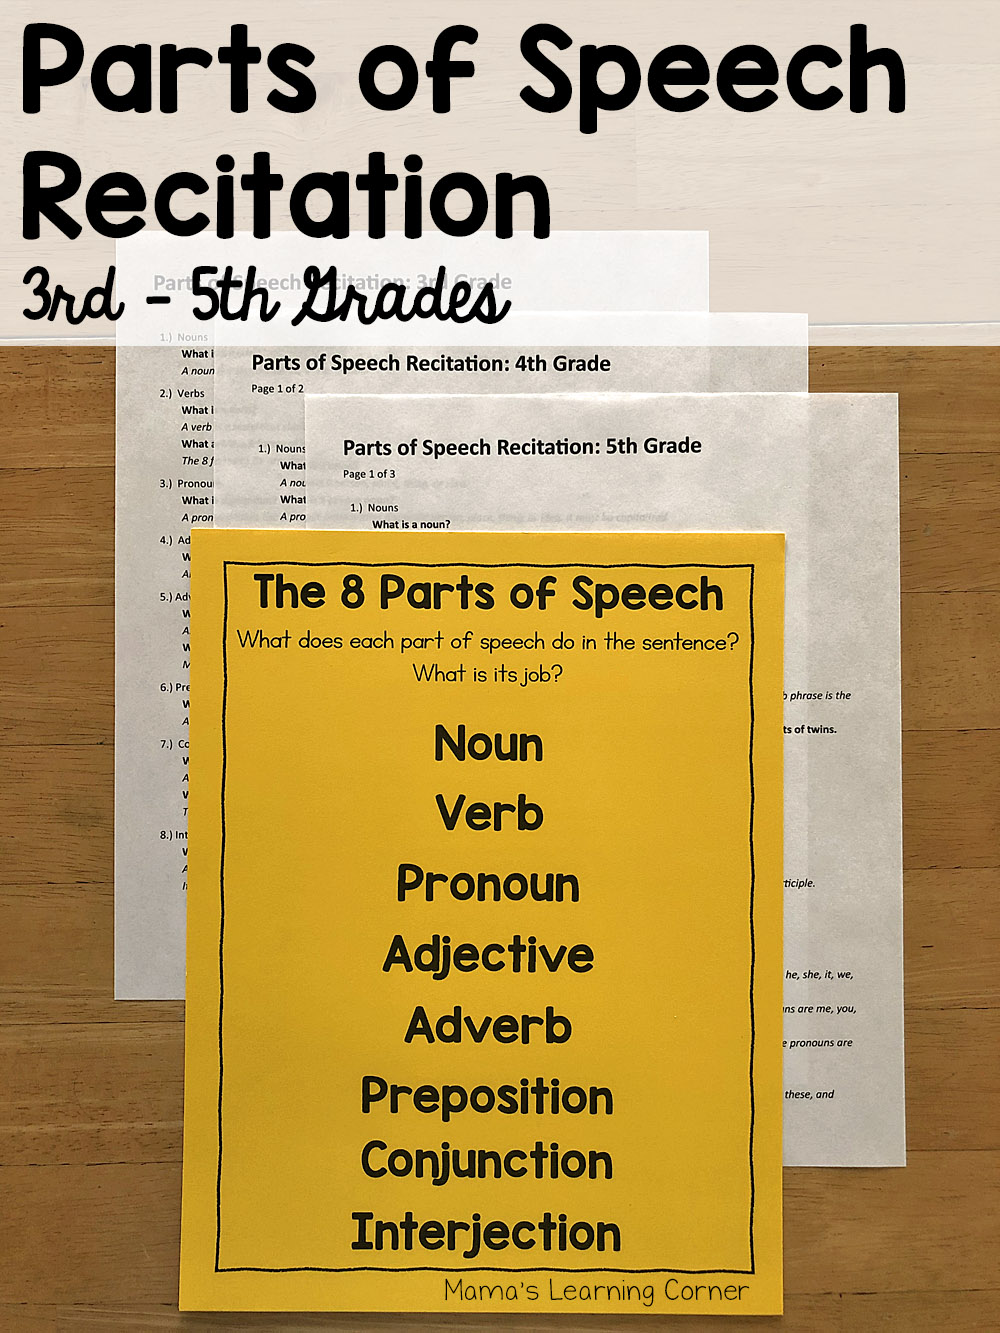 Parts of Speech Recitation 3rd through 5th Grades